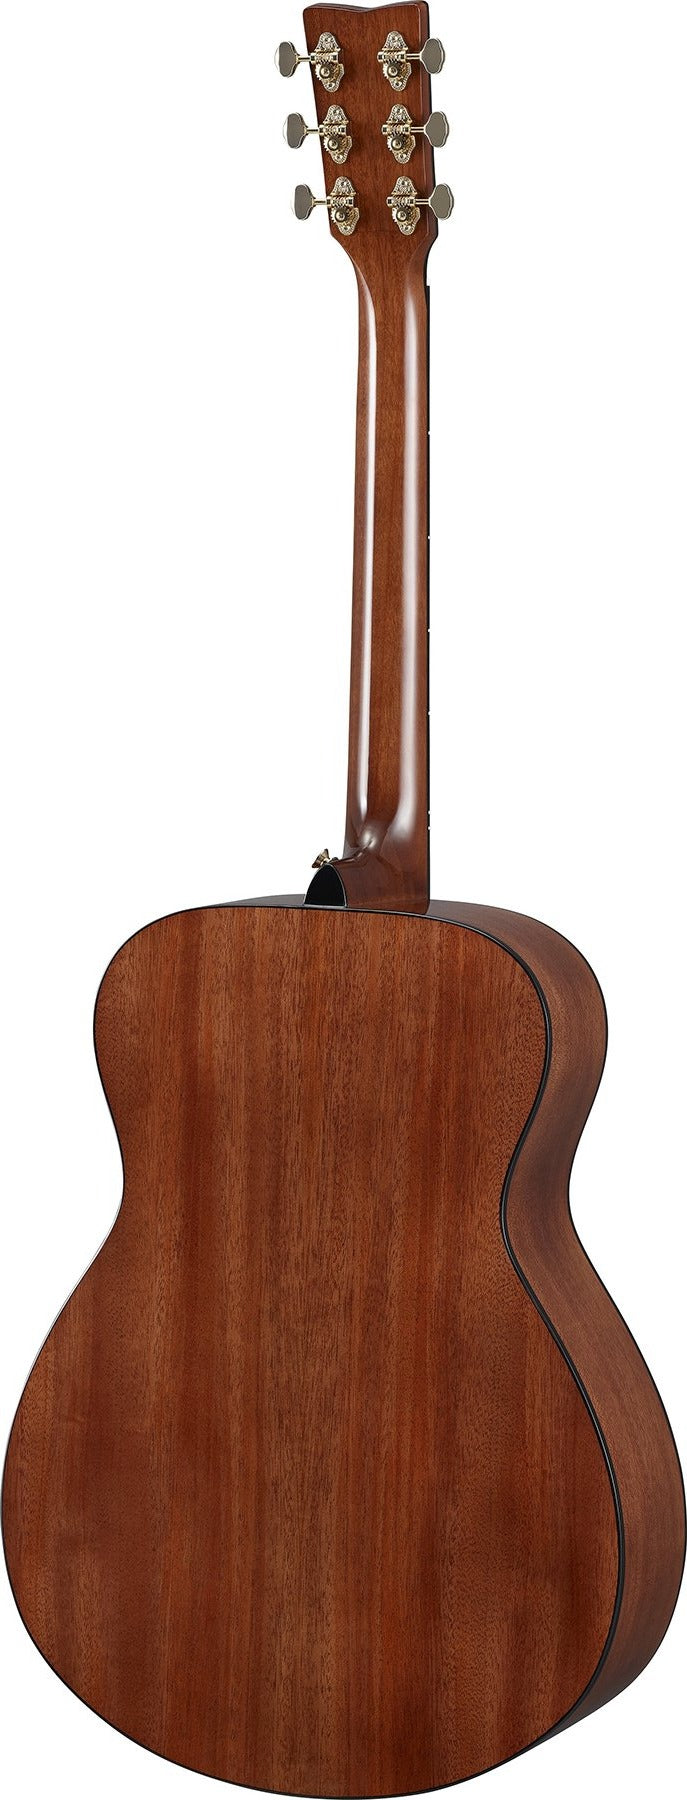 Yamaha Storia III Acoustic Guitar